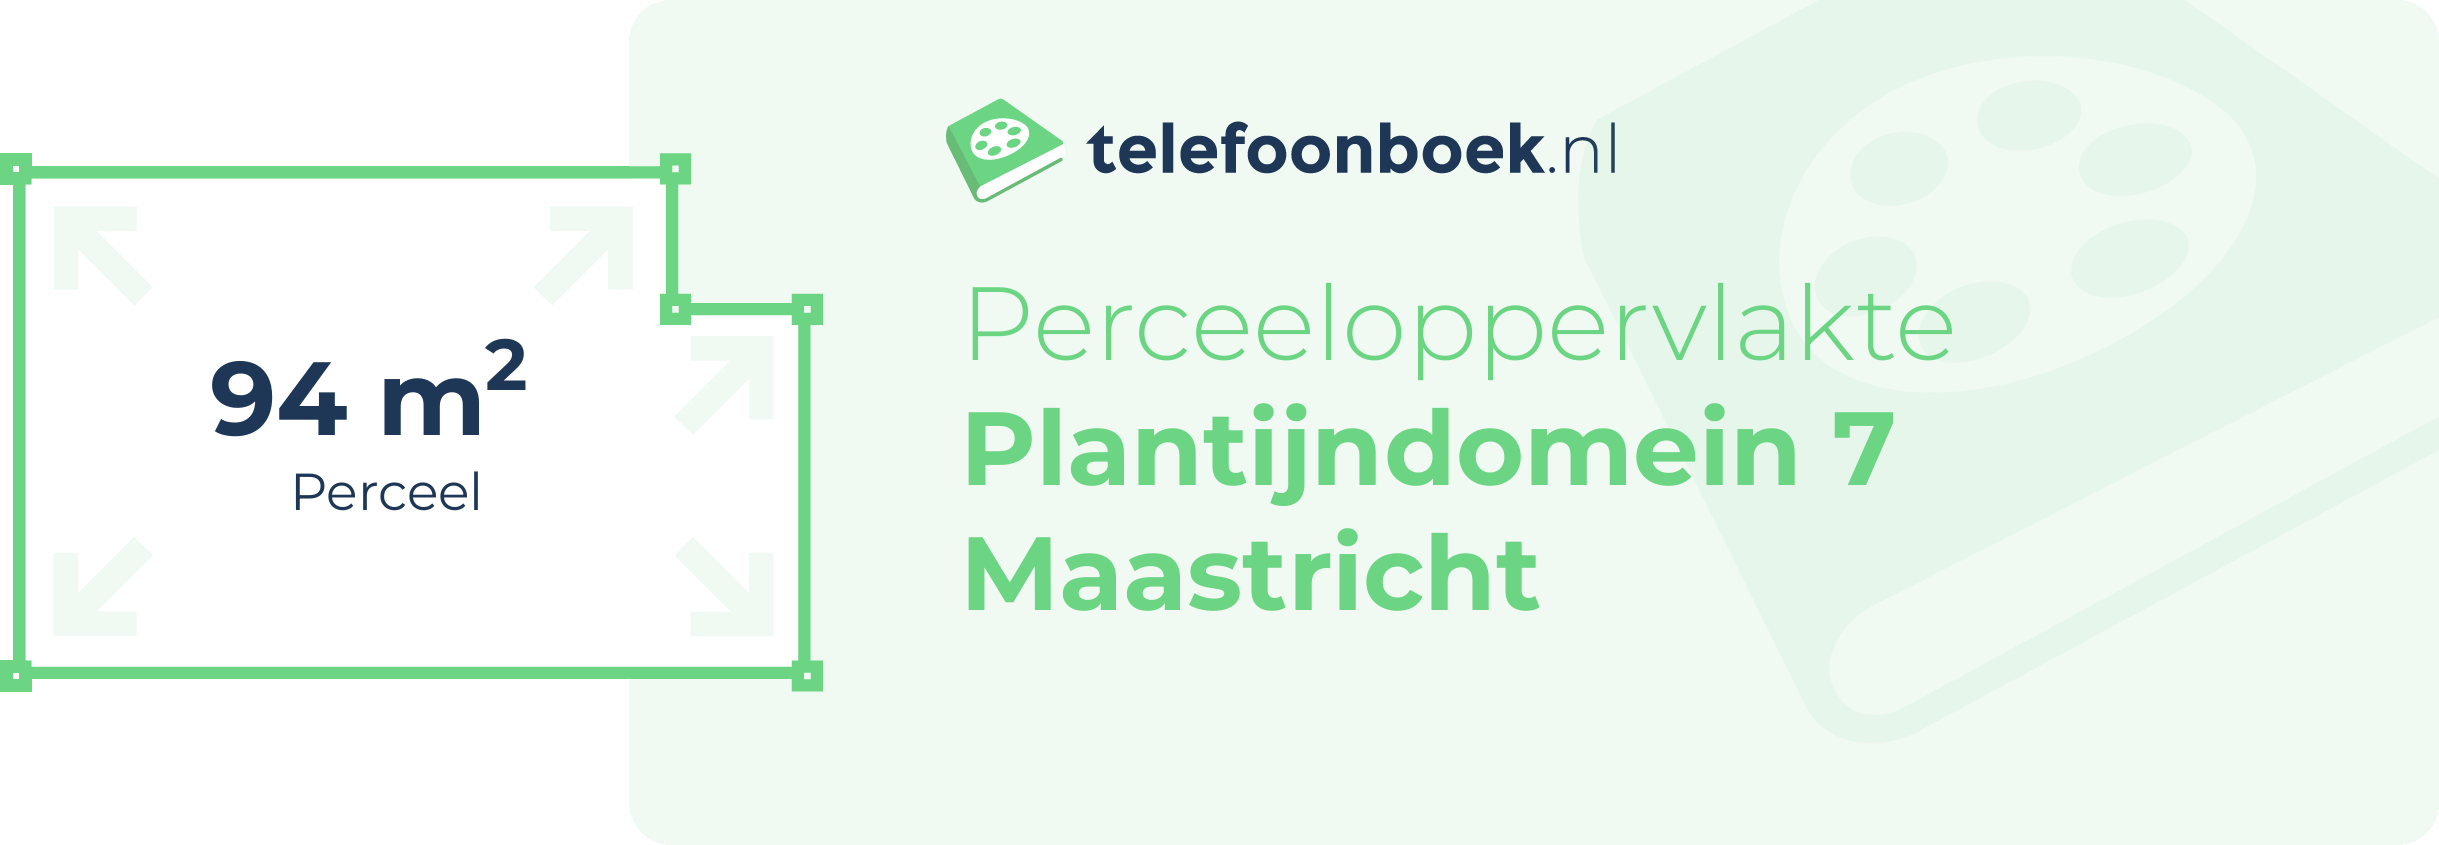 Perceeloppervlakte Plantijndomein 7 Maastricht